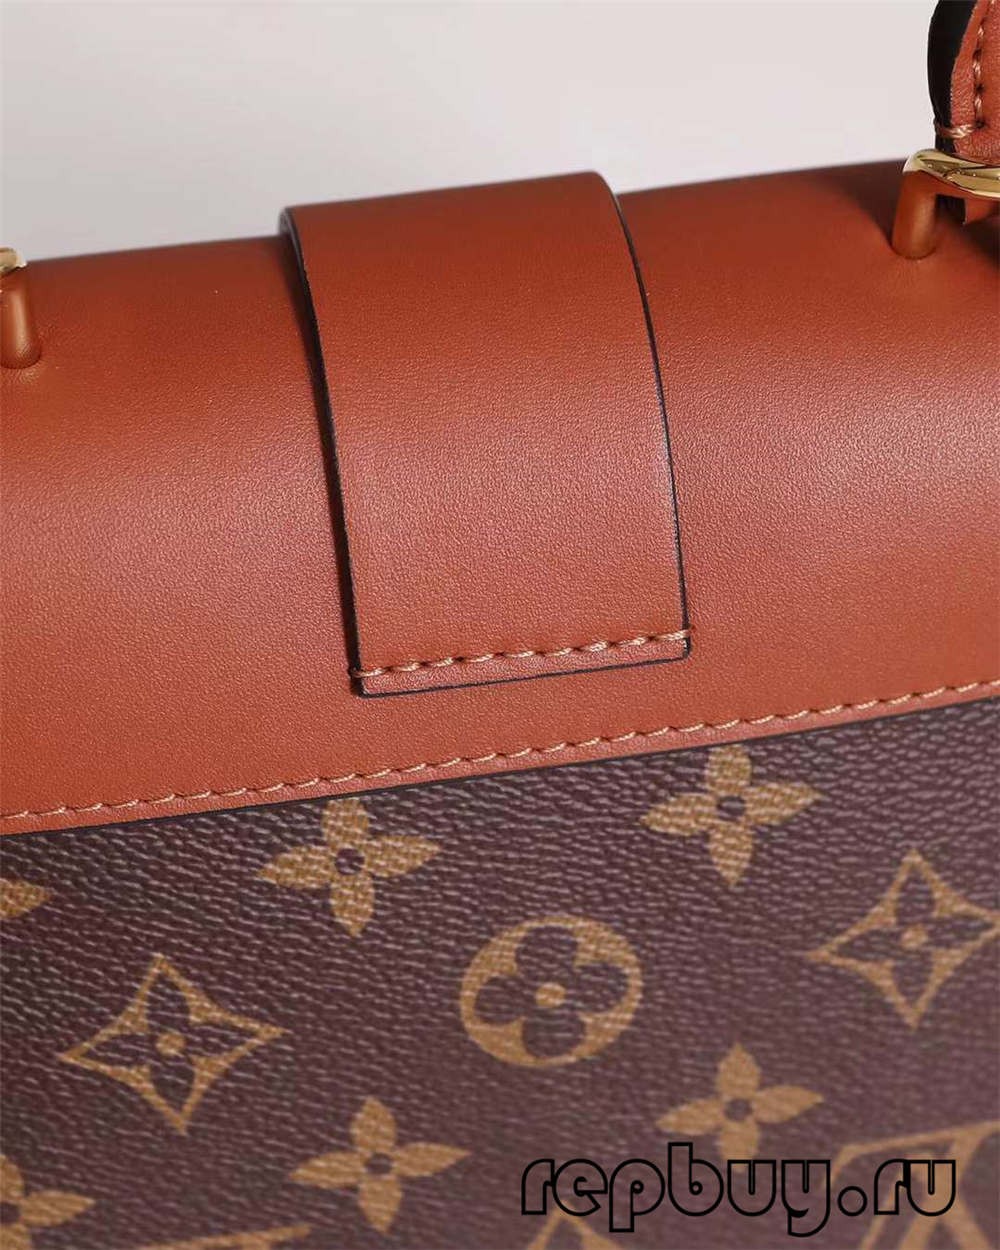 लुइस Vuitton M44654 20cm लक BB ब्राउन शीर्ष प्रतिकृति झोला (2022 विशेष)-Best Quality Fake Louis Vuitton Bag Online Store, Replica designer bag ru